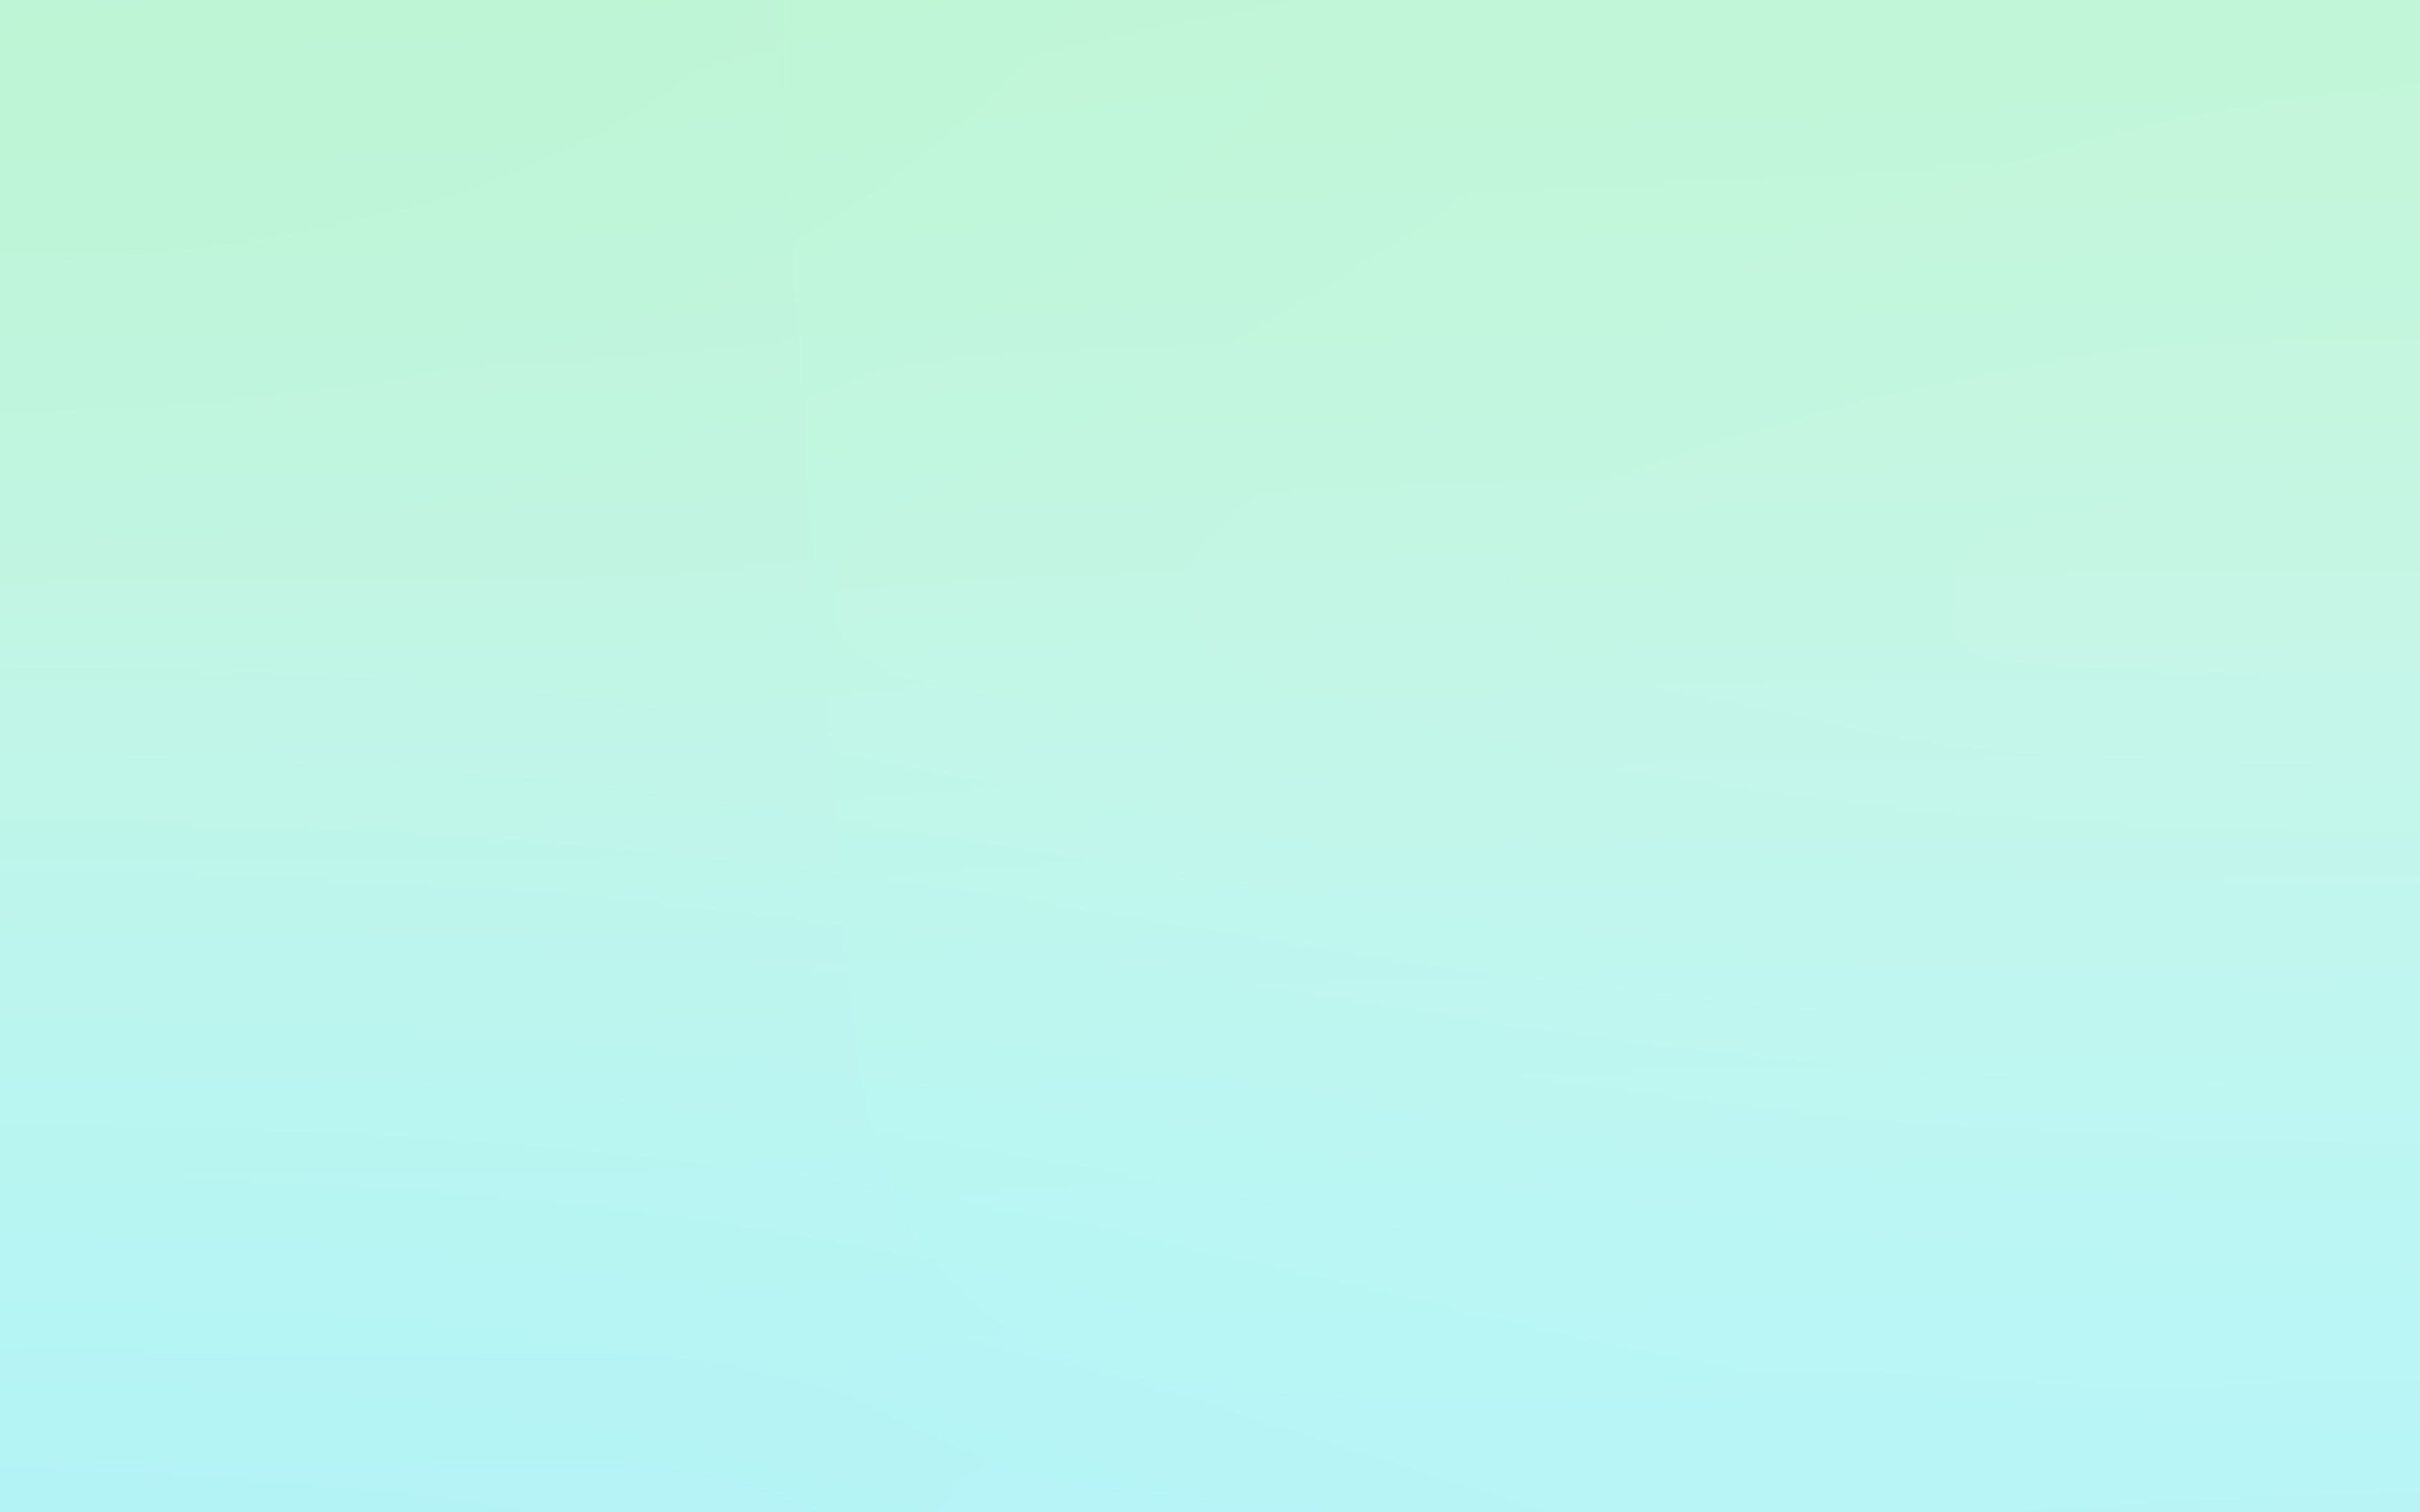 Wallpaper Green and Blue blur gradient